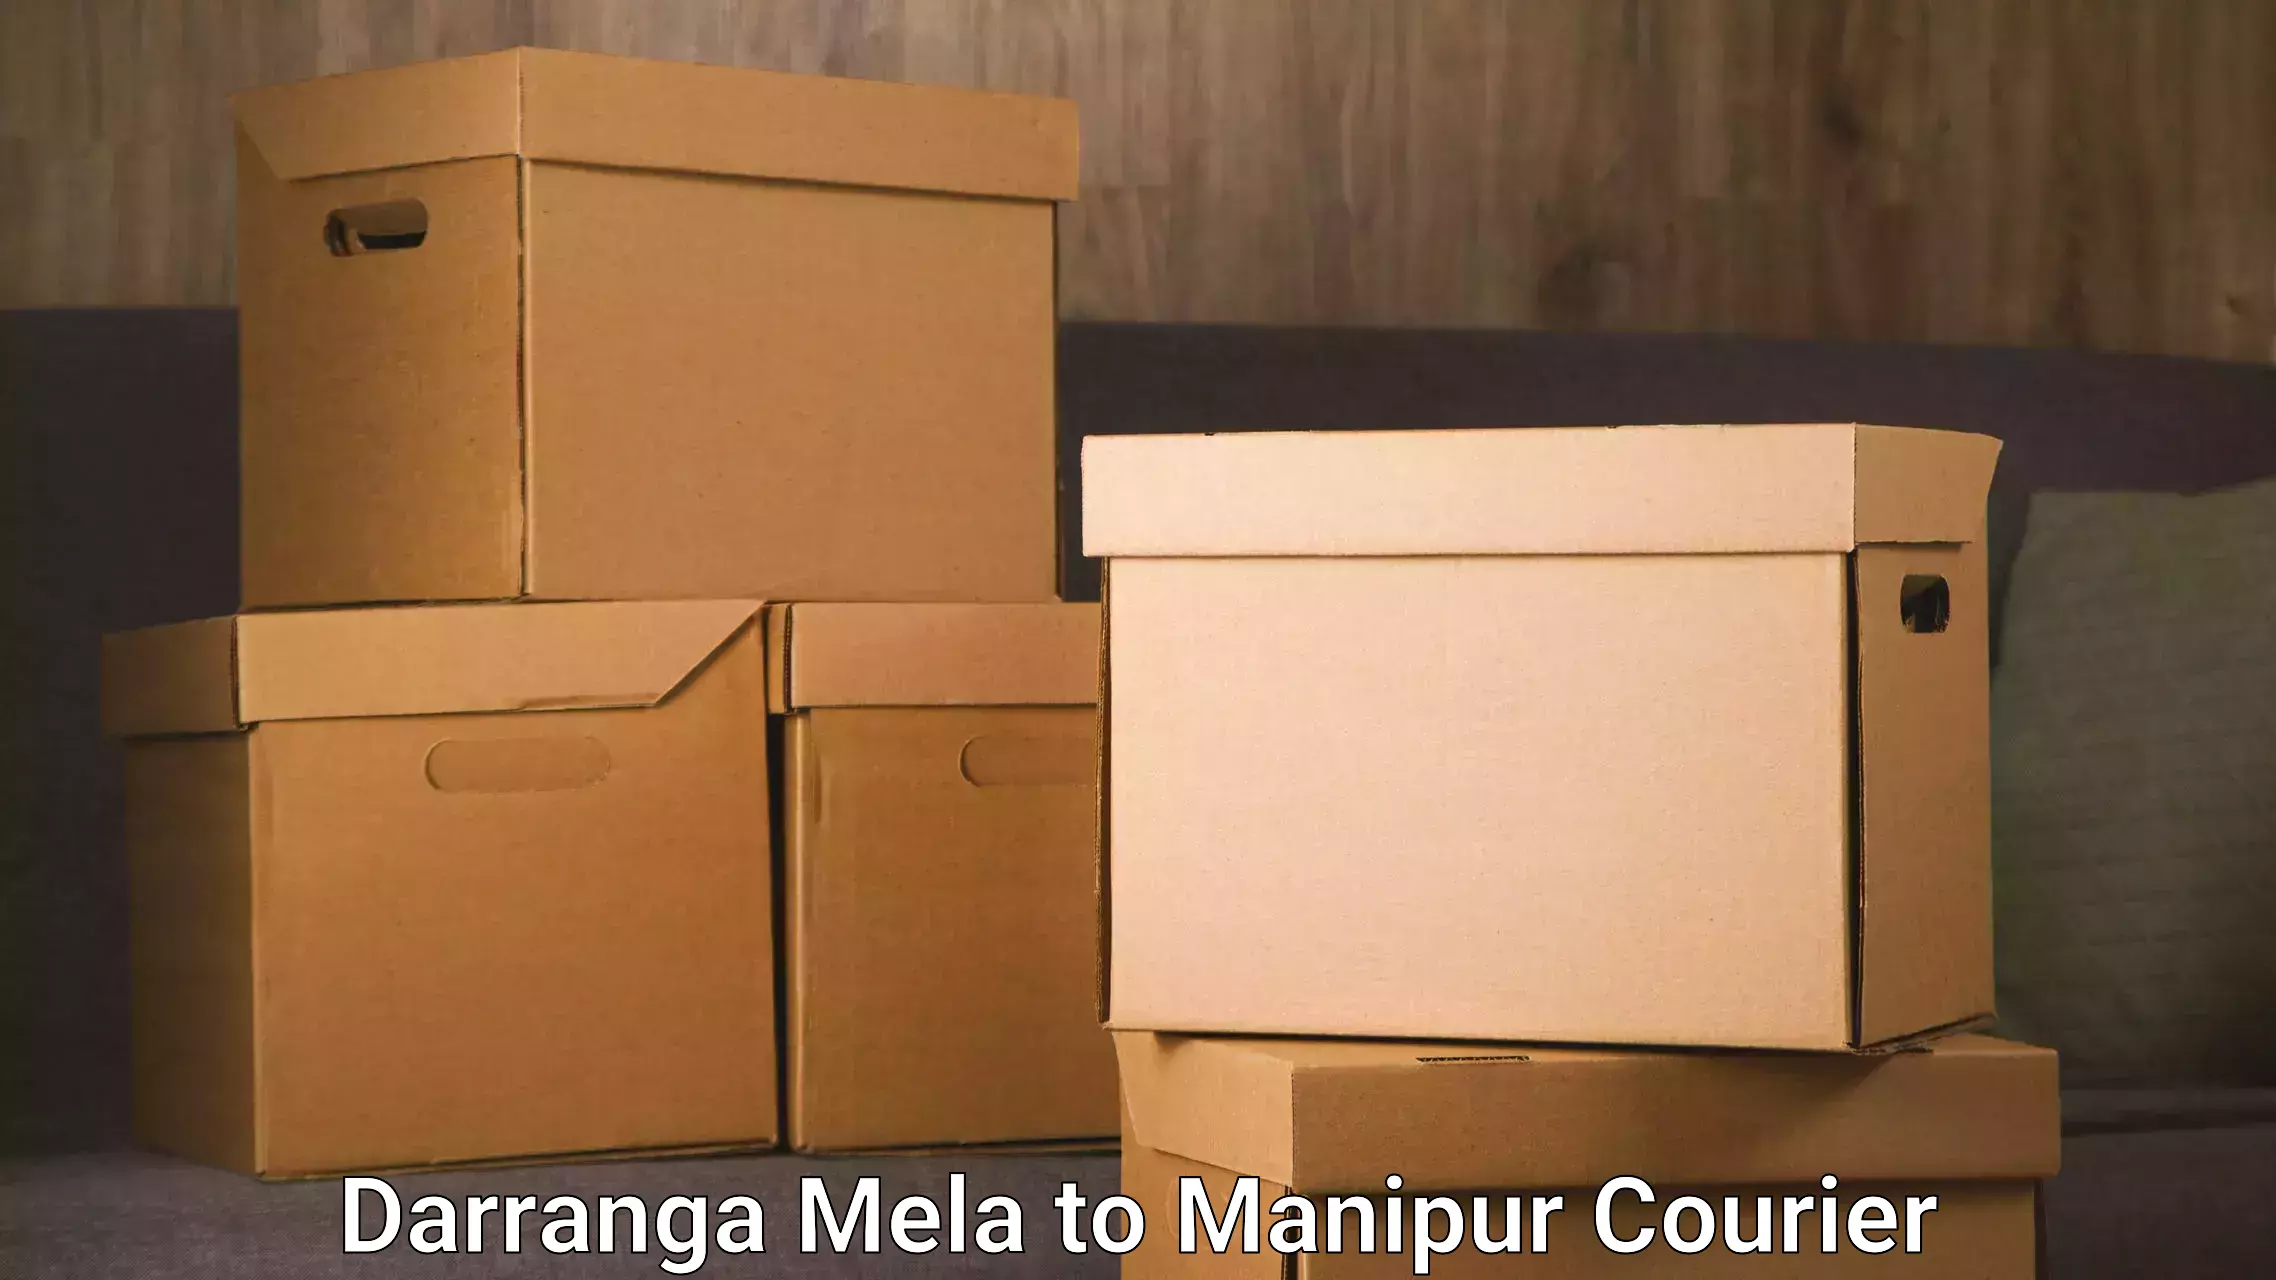 High-efficiency logistics Darranga Mela to Churachandpur